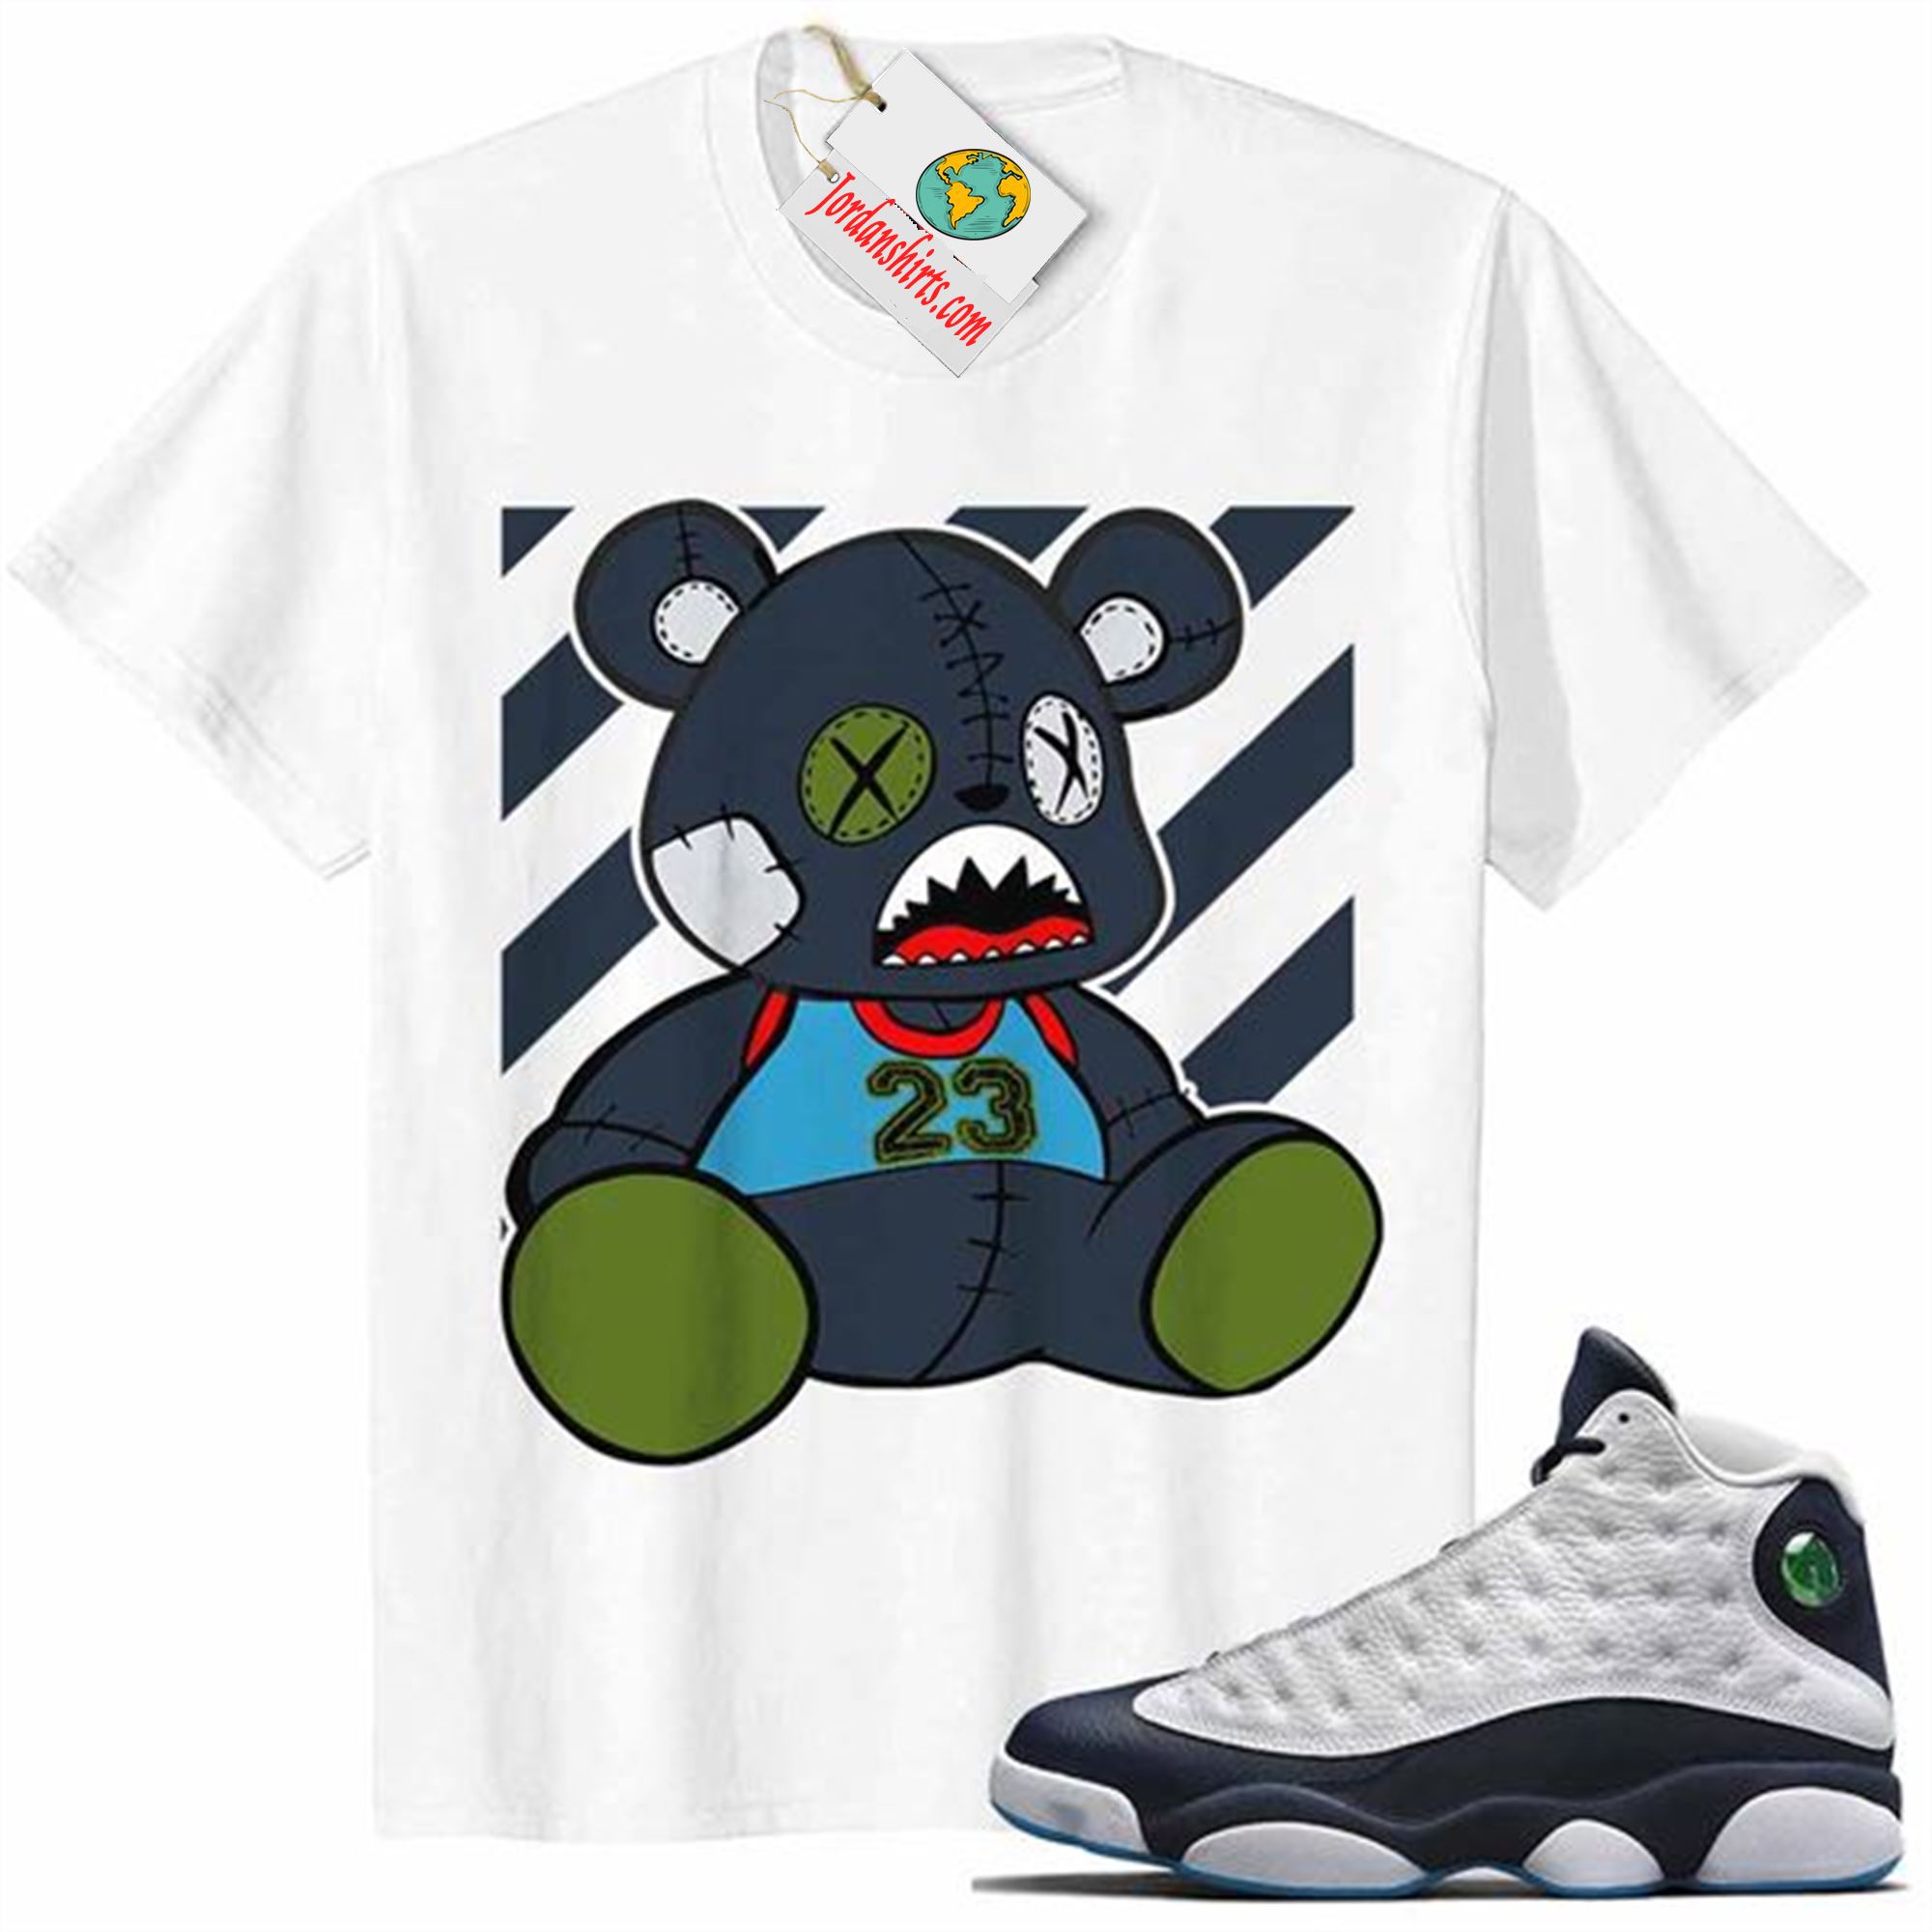 Jordan 13 Shirt, 23 Teddy White Air Jordan 13 Obsidian 13s Size Up To 5xl